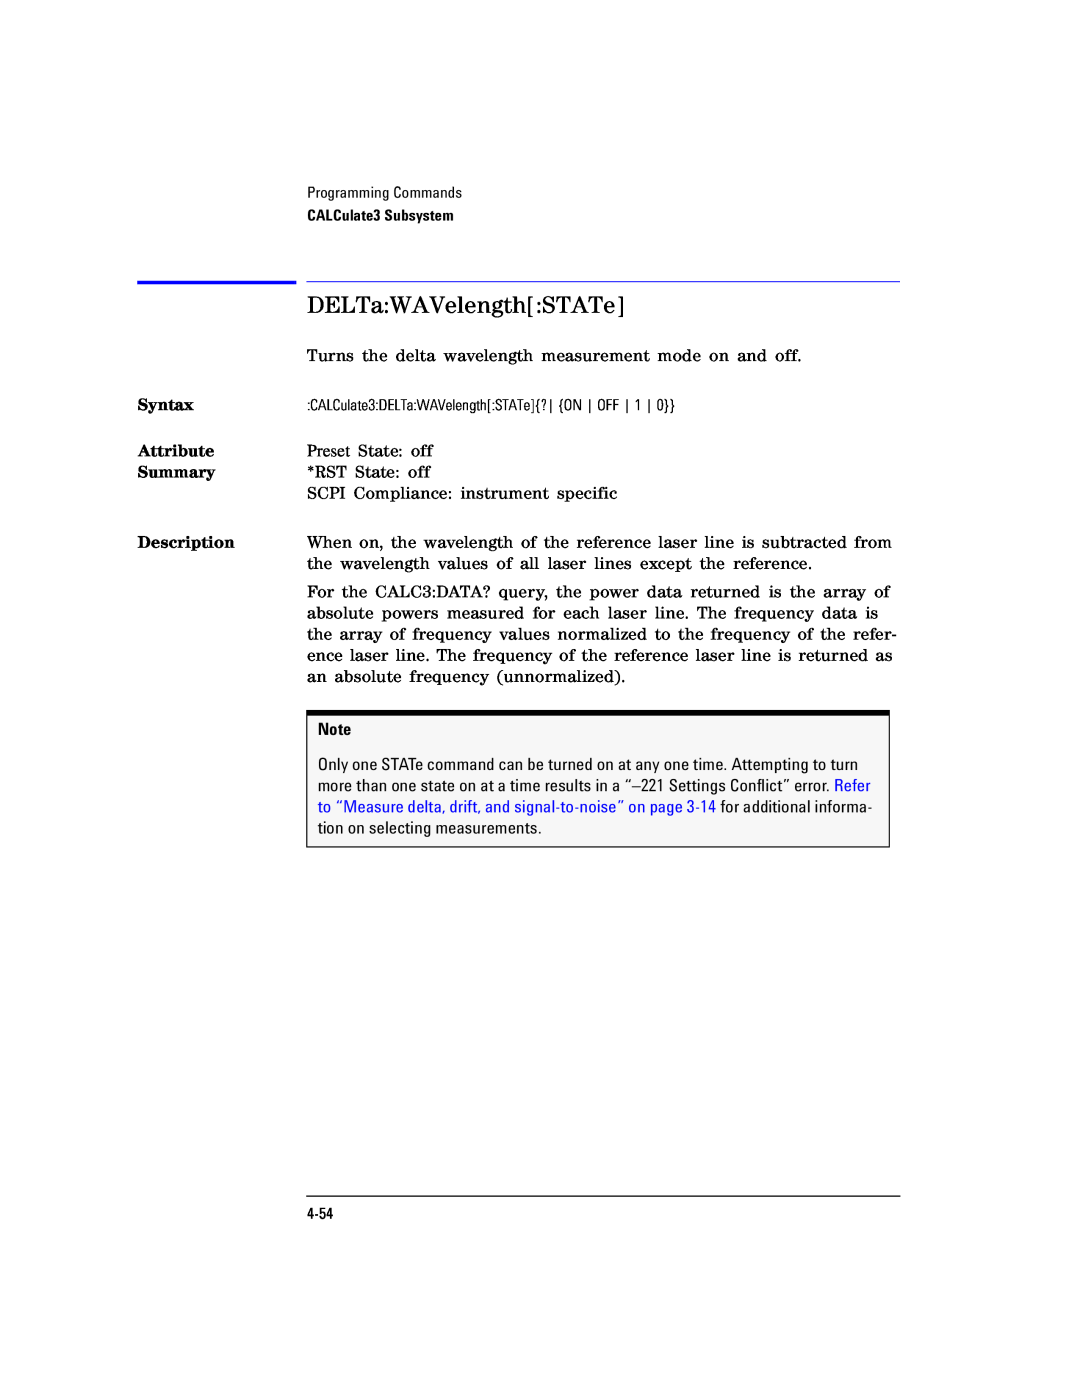 Agilent Technologies Agilent 86120C manual DELTaWAVelengthSTATe, Syntax, Attribute, Summary, Description 